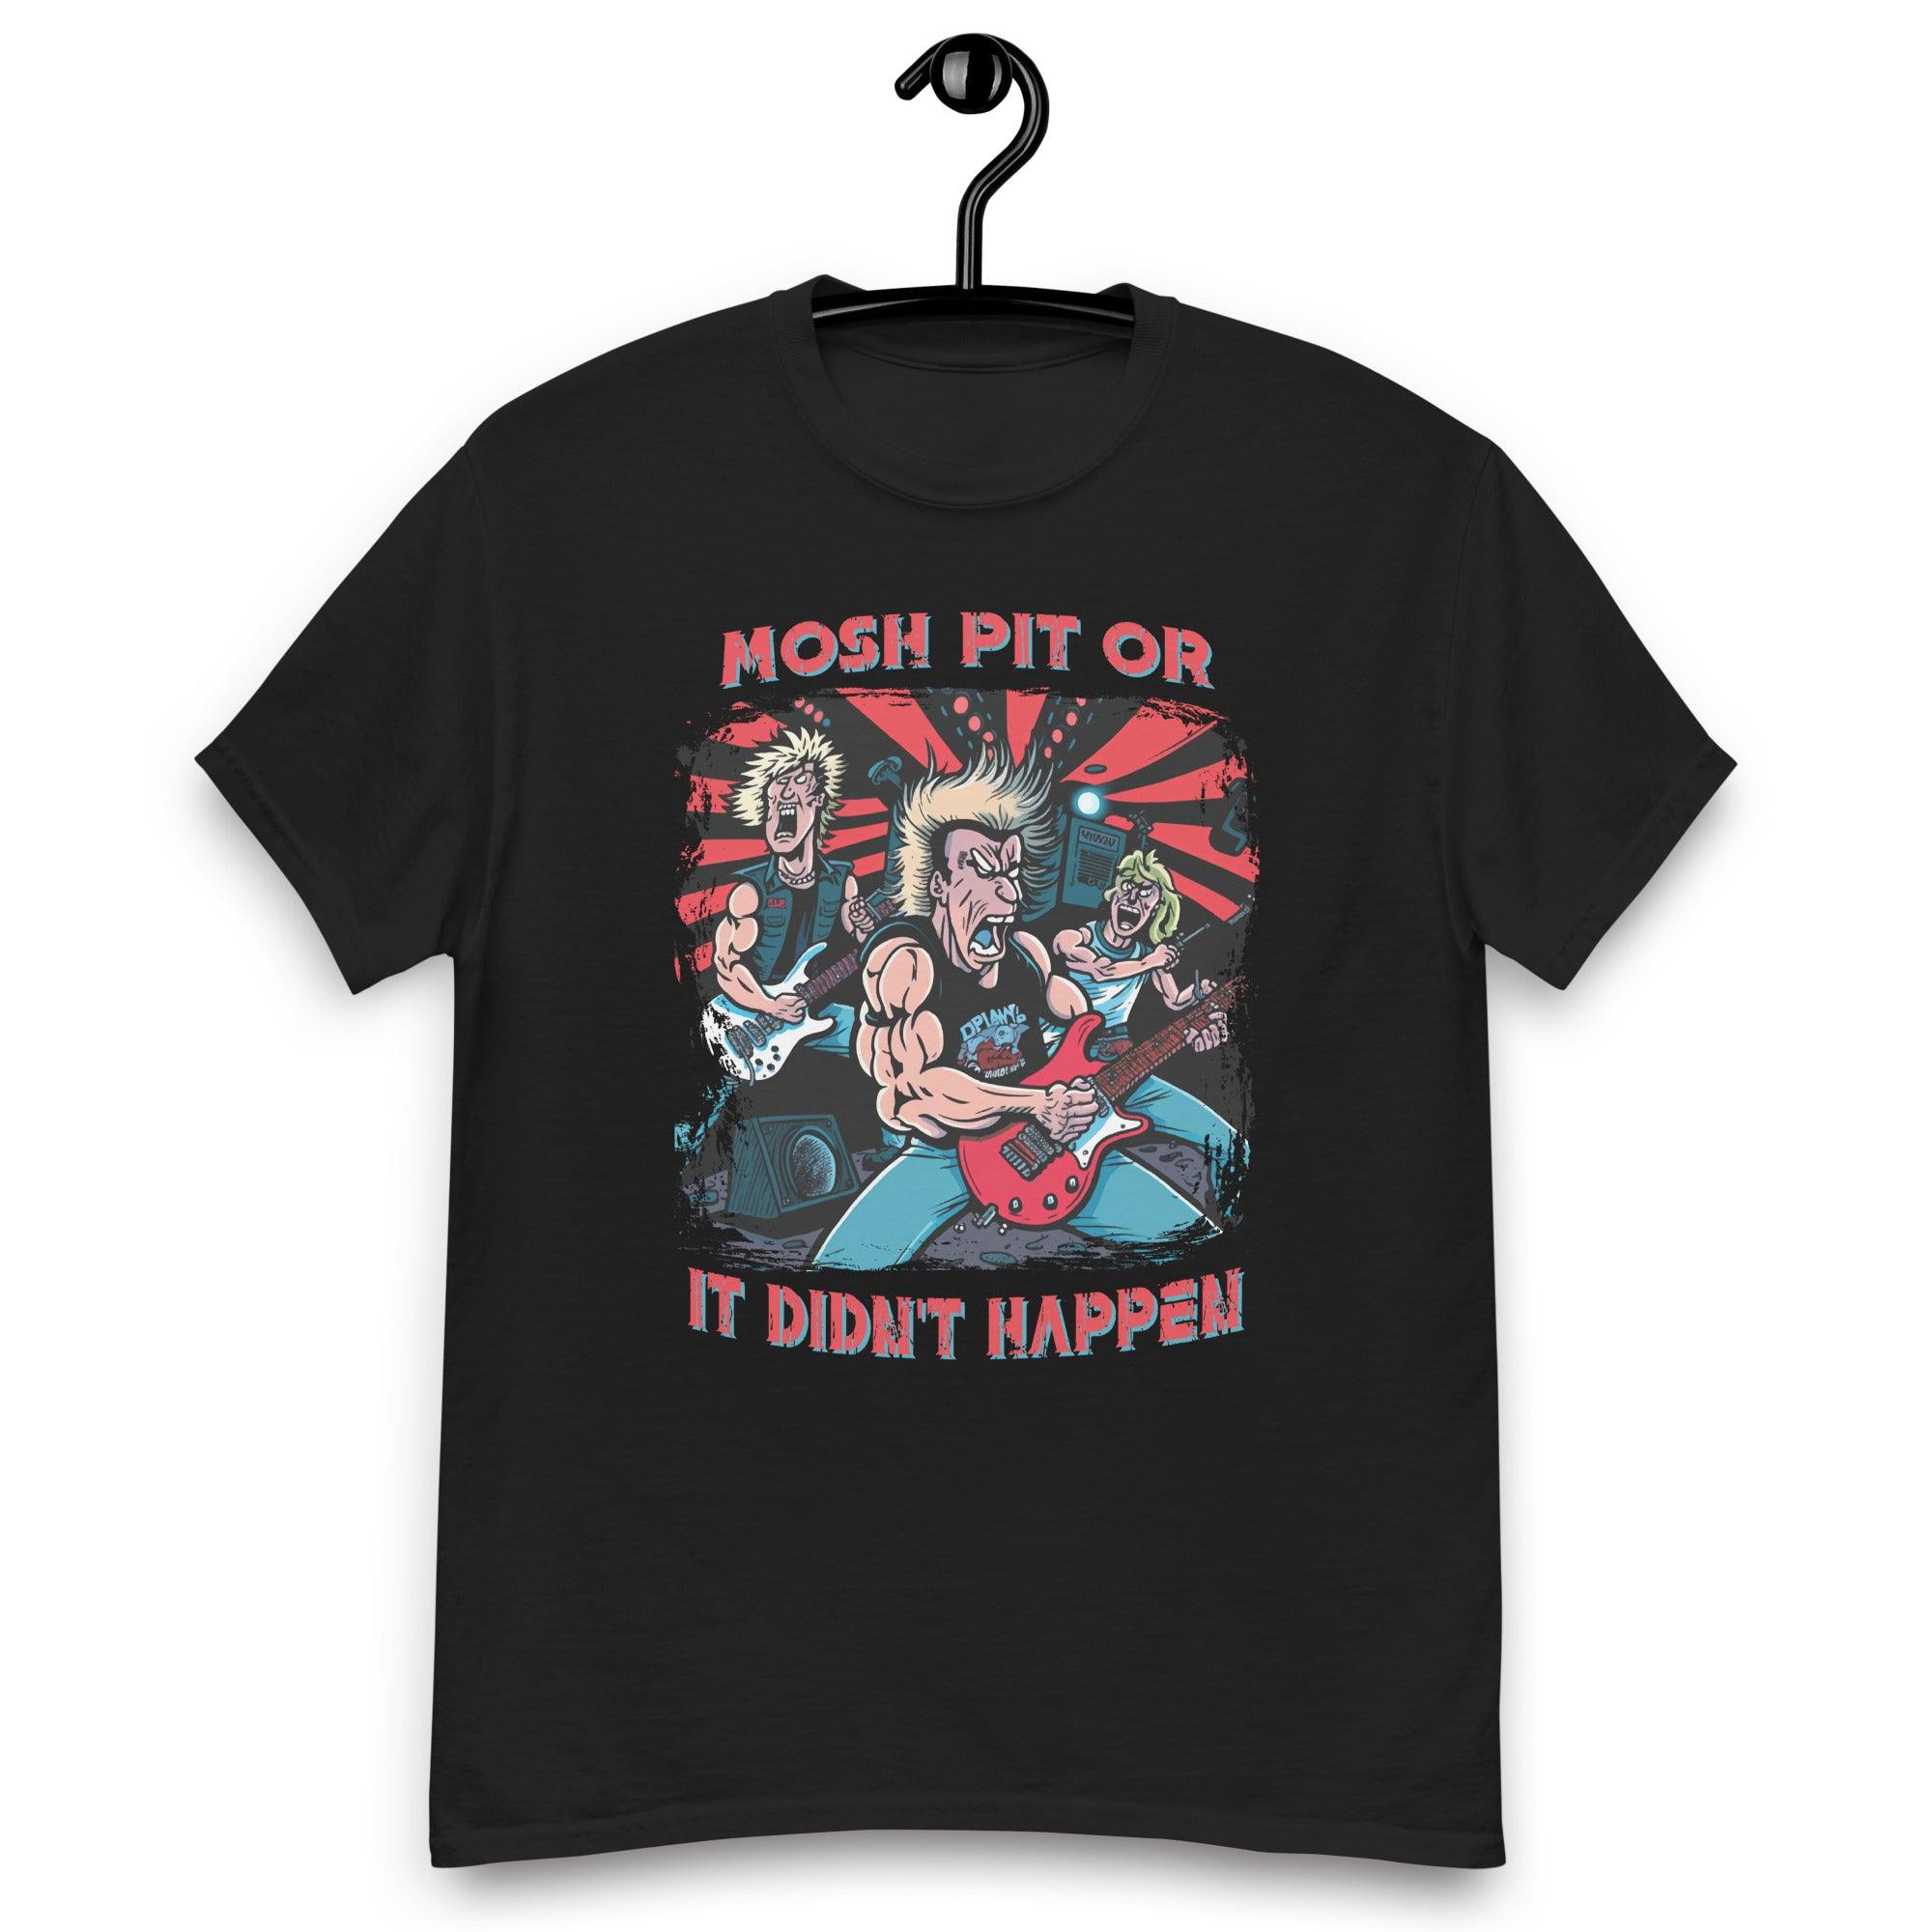 Mosh pit men's classic tee - Beyond T-shirts